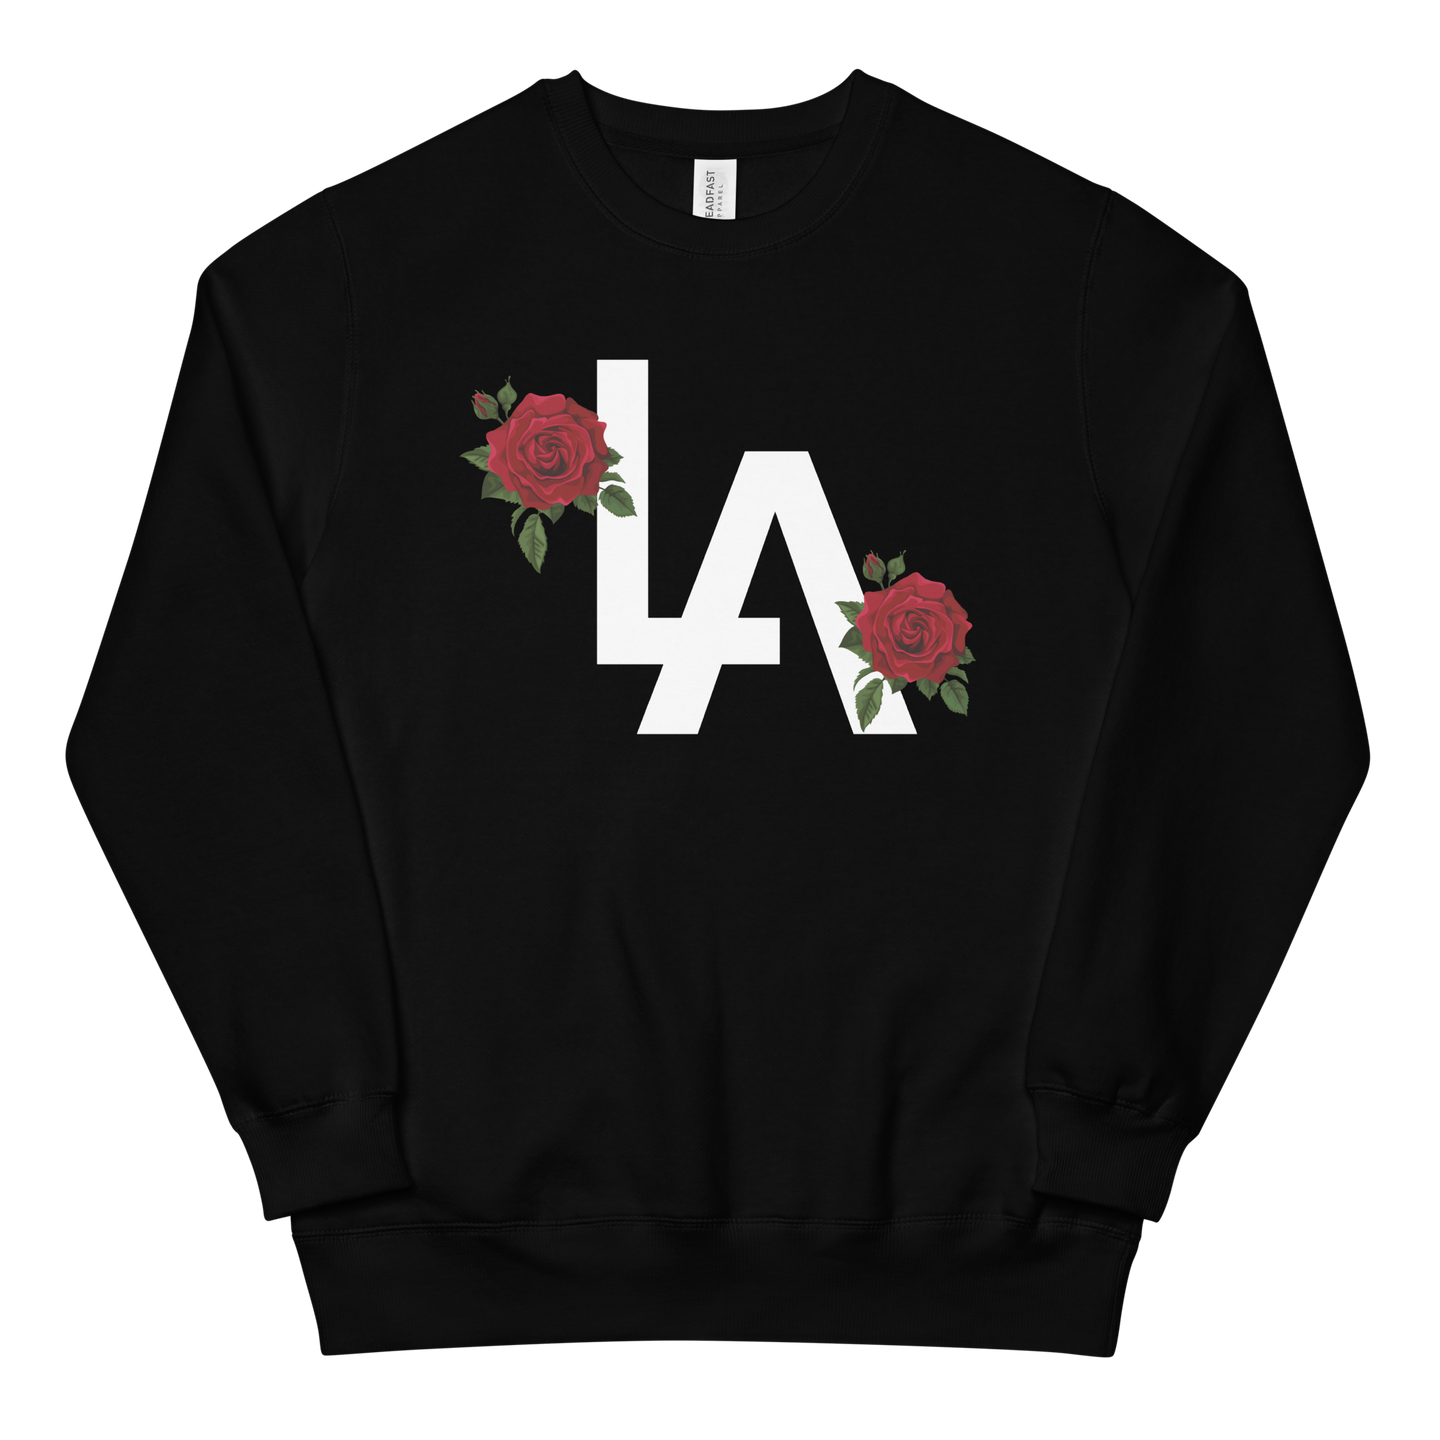 Men's L.A ROSE design Unisex Sweatshirt.